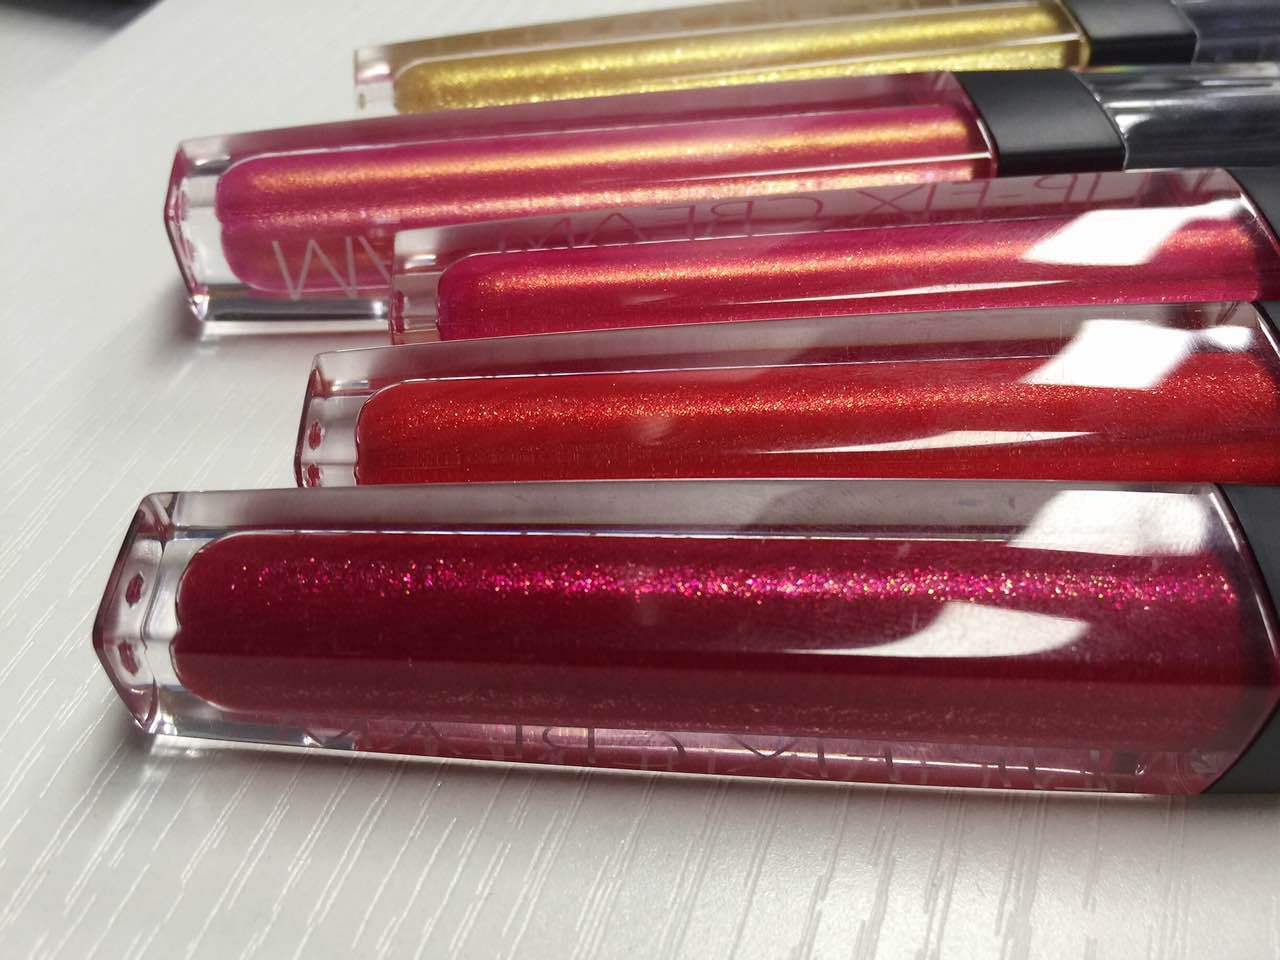 5 Colors Mermaid Lip Gloss Liquid Sparkling Shining Makeup Cosmetics Glittering Vivid 